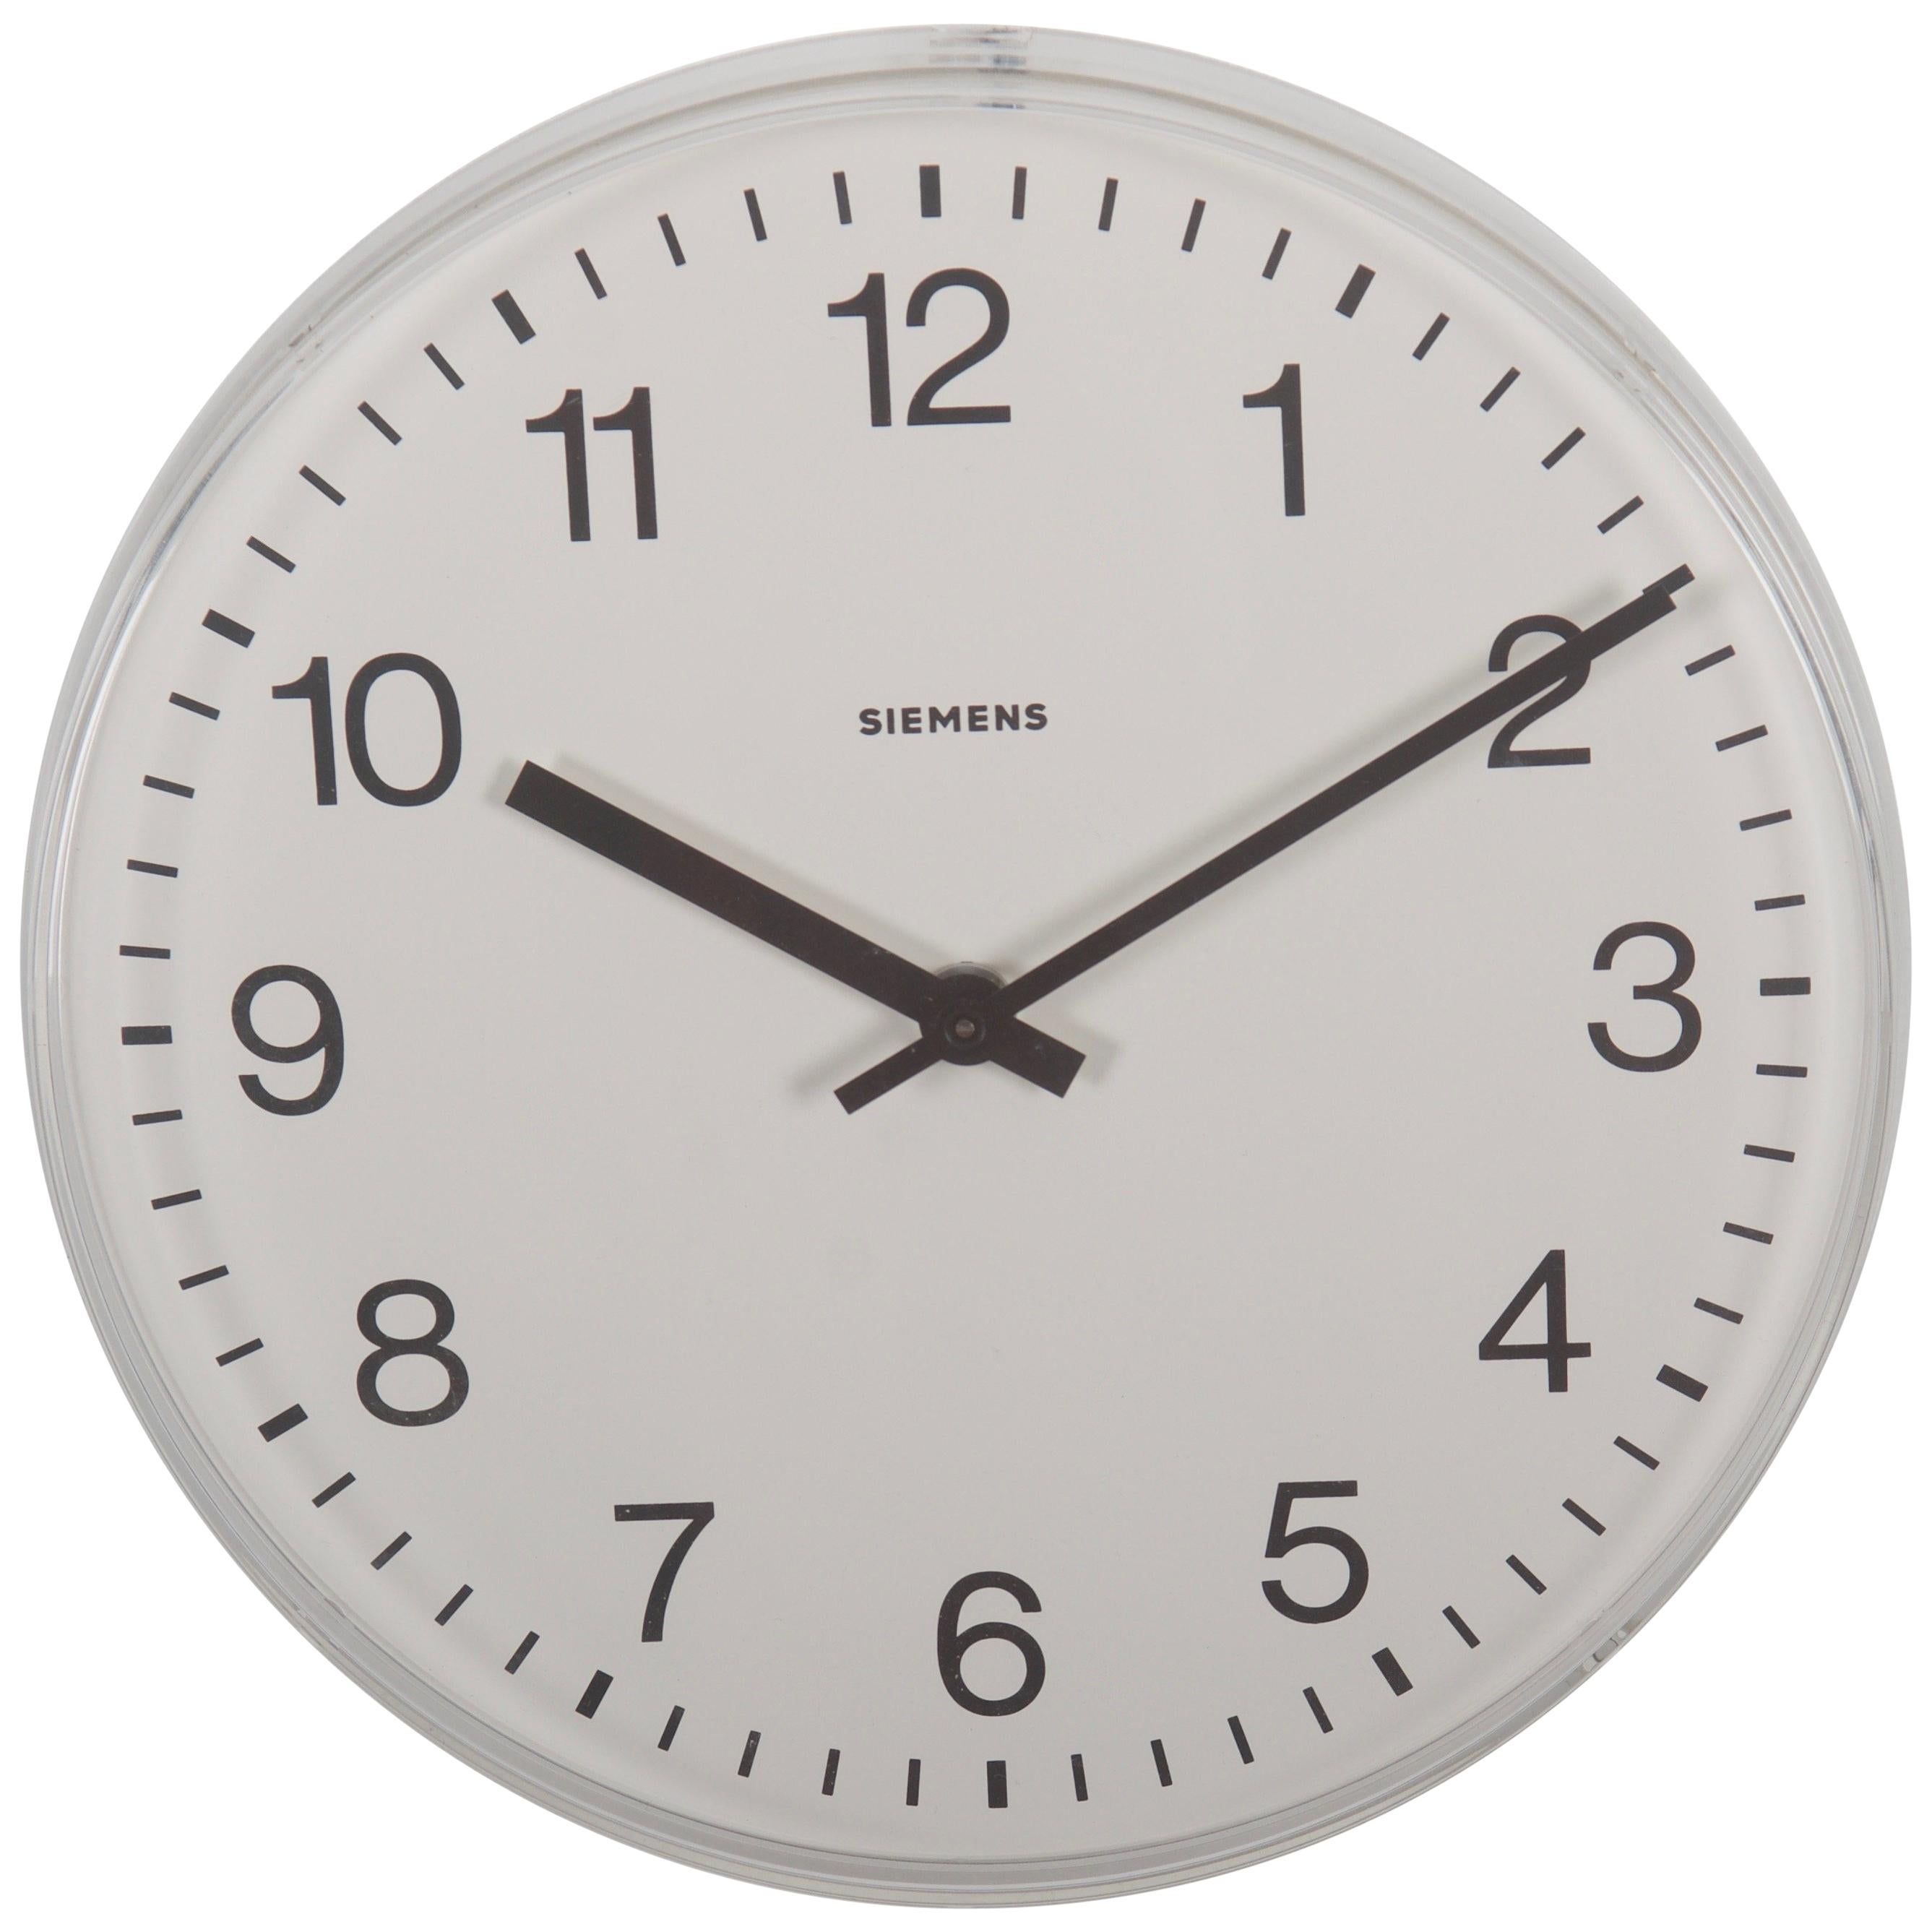 Siemens Factory, Workshop or Train Station Clock